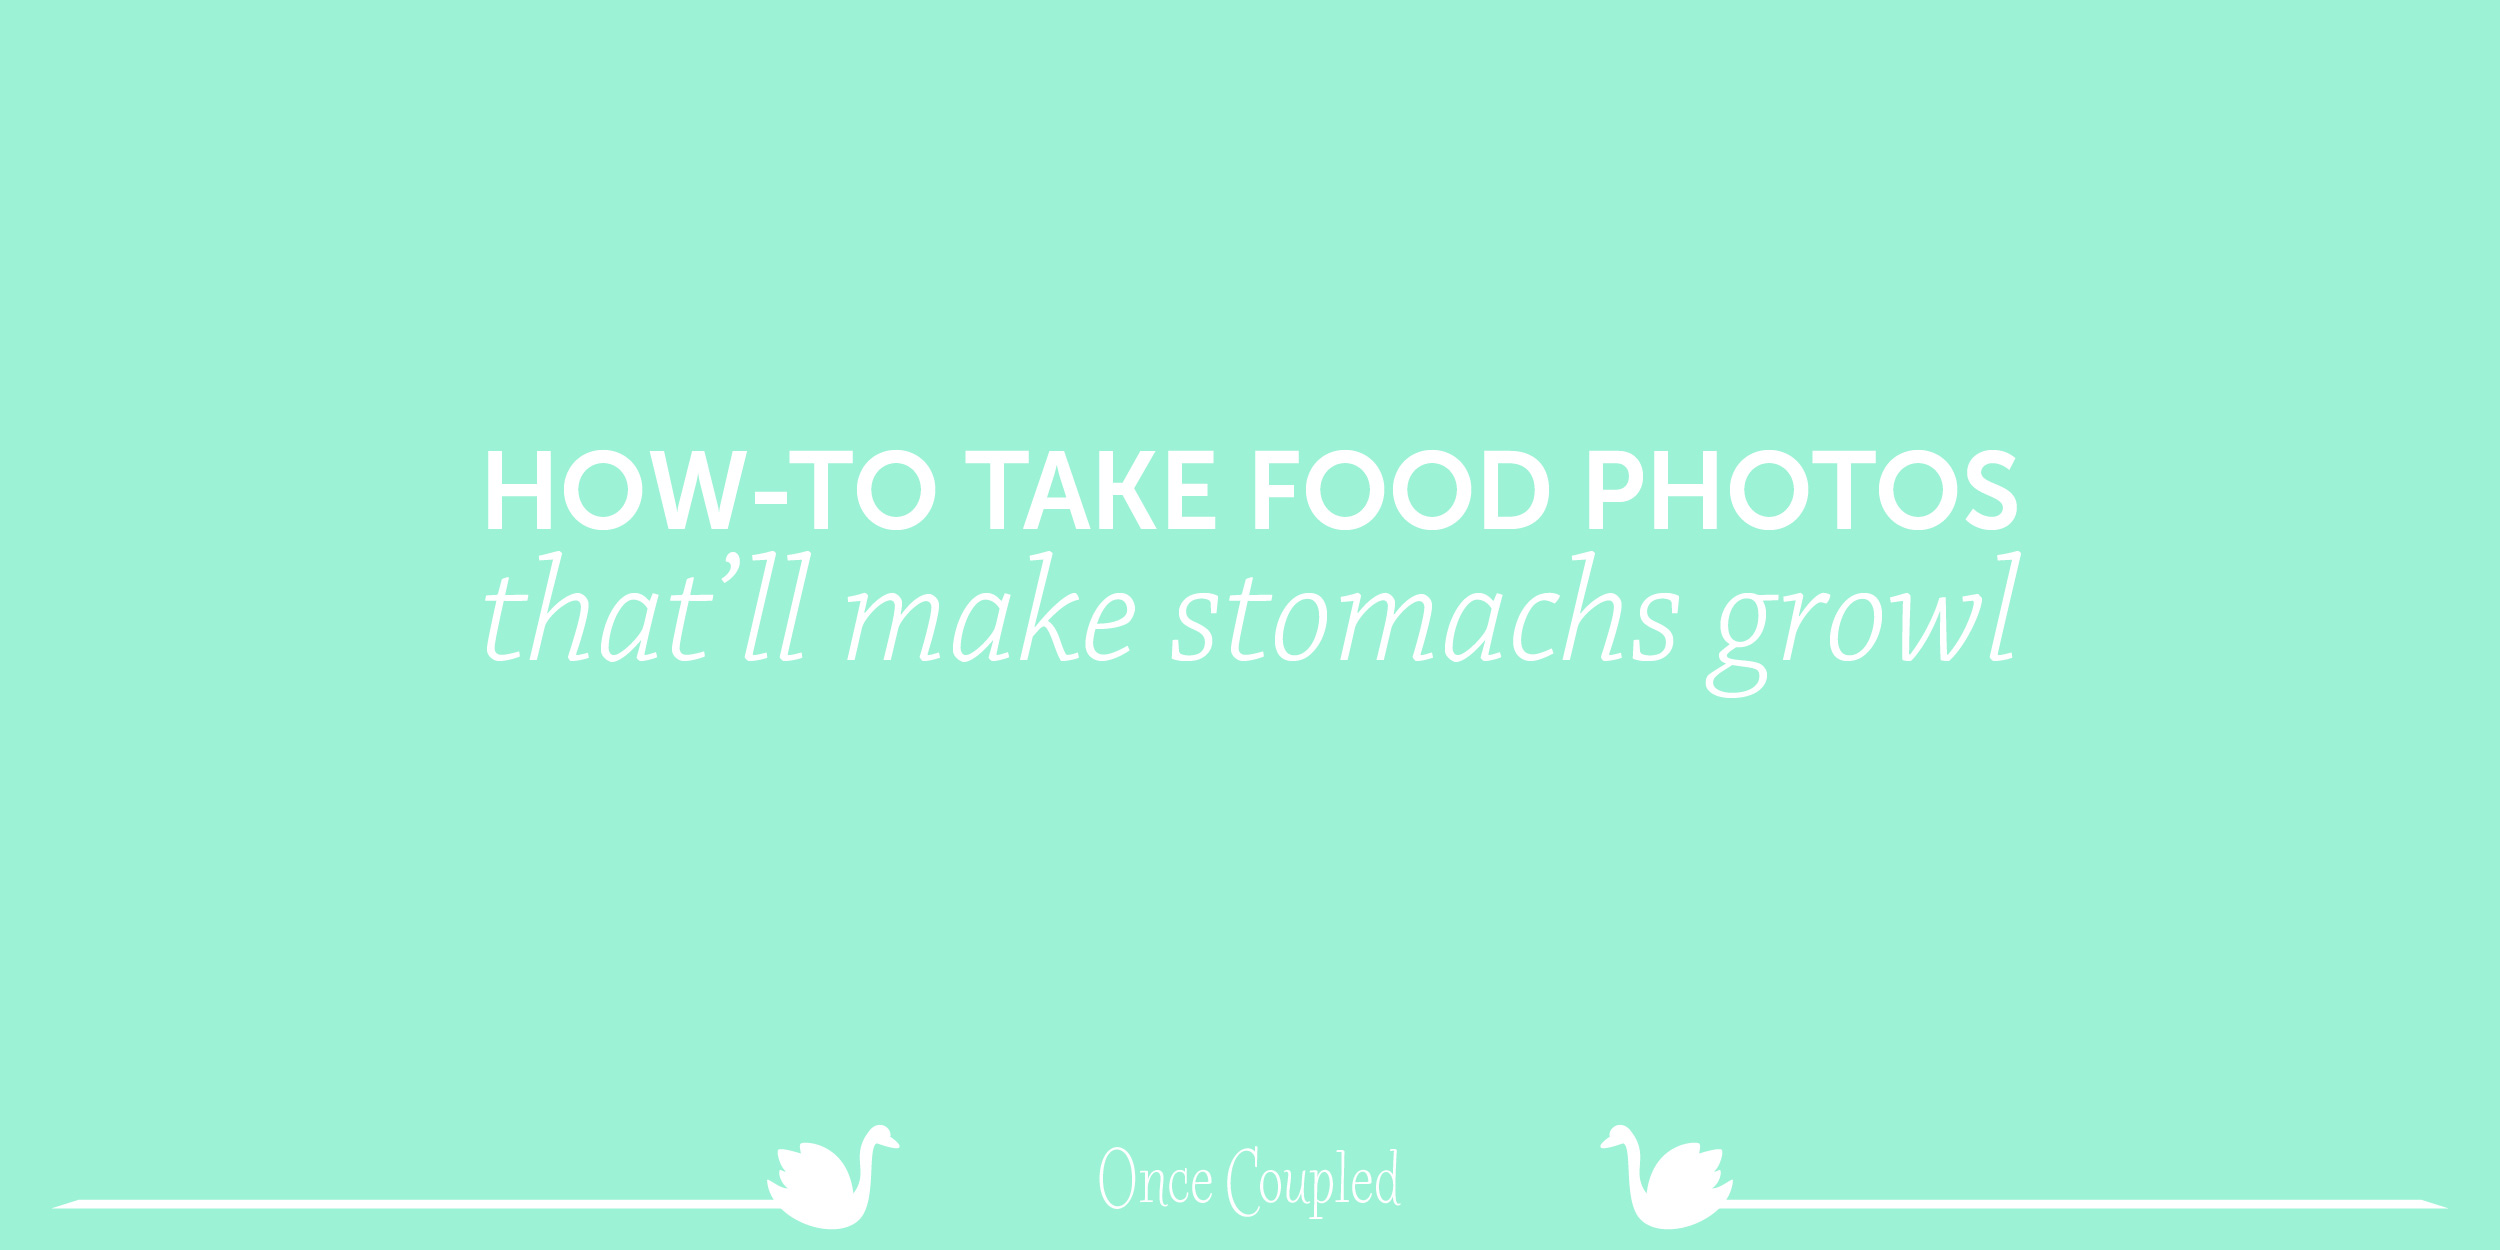 How to Take Food Photos That Make Stomachs Growl